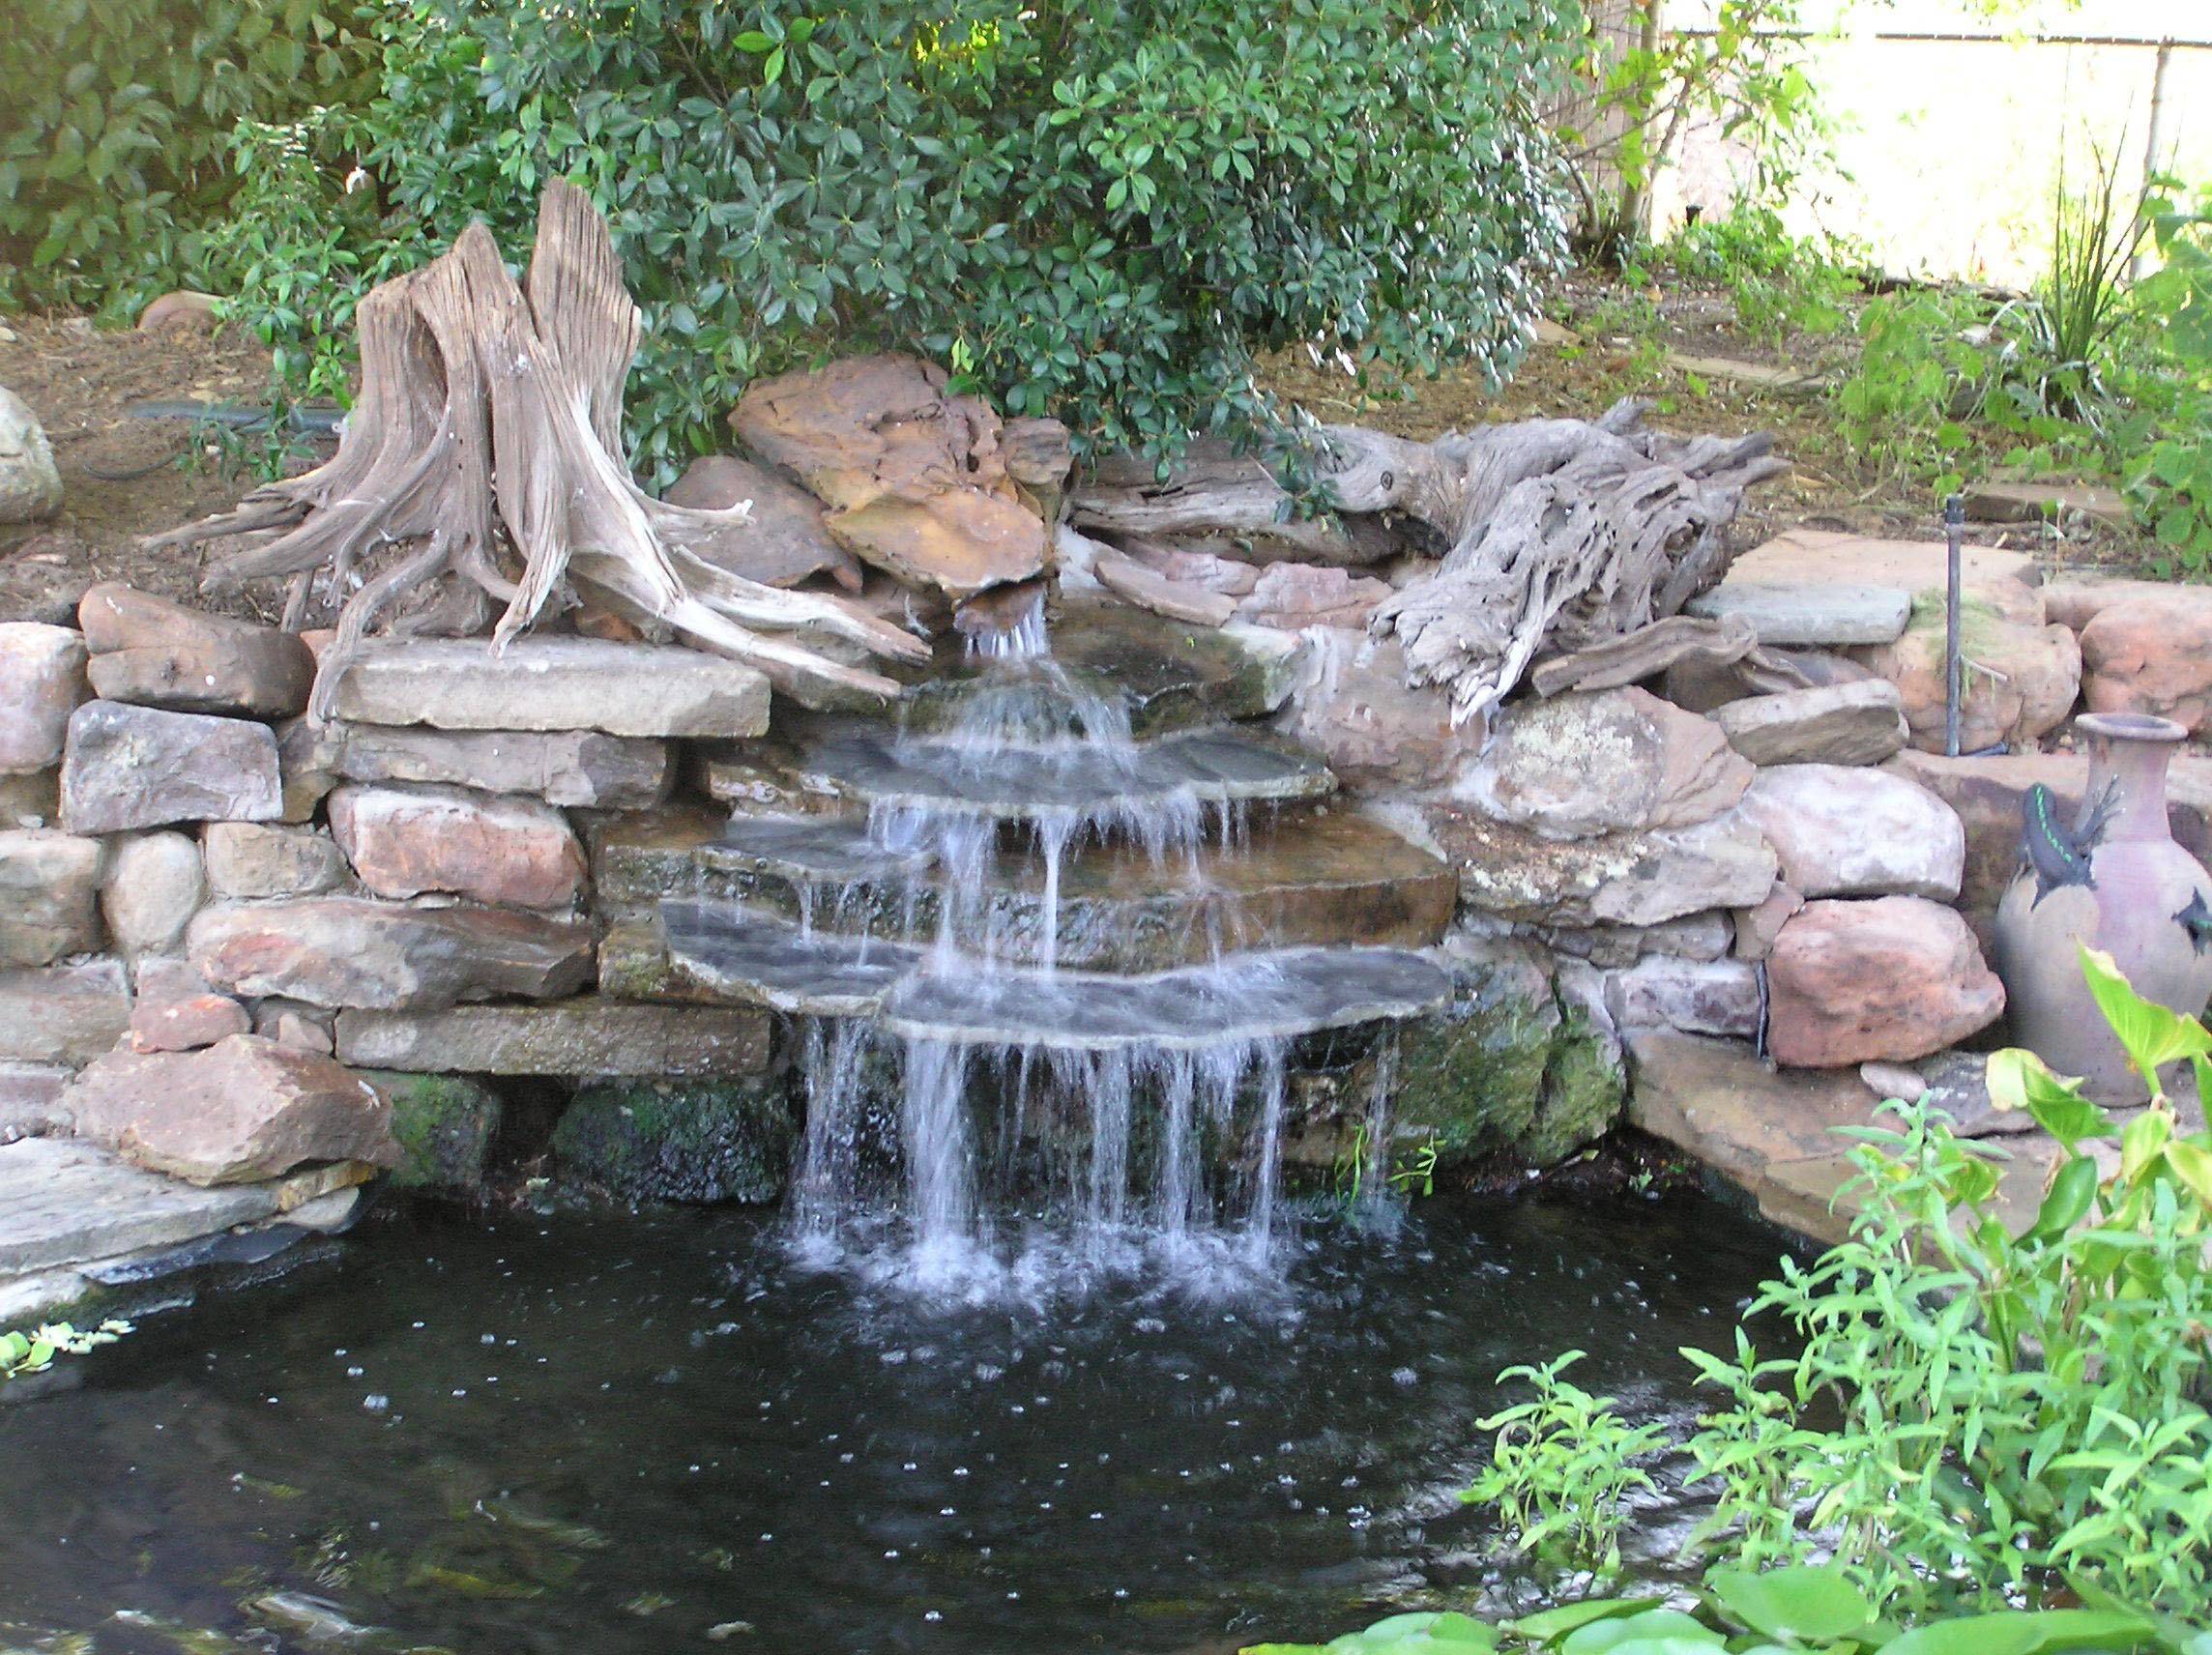 Best Diy Backyard Pond Ideas